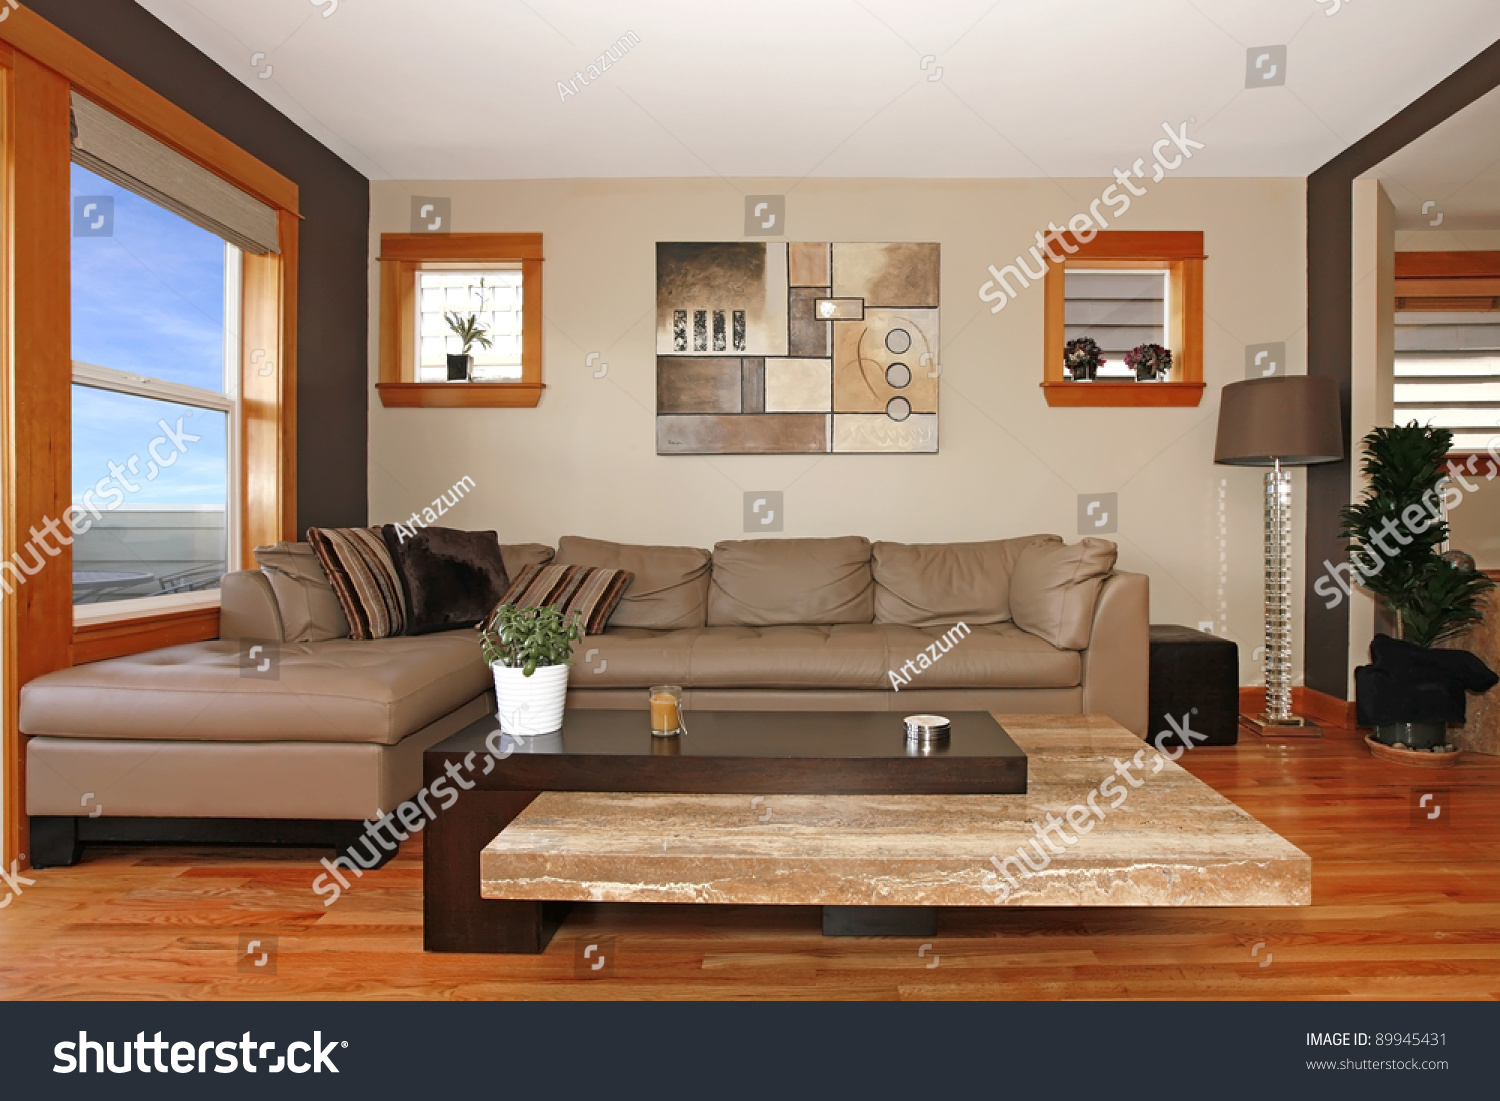 Shutterstock Images Of Living Room Hand Rendered